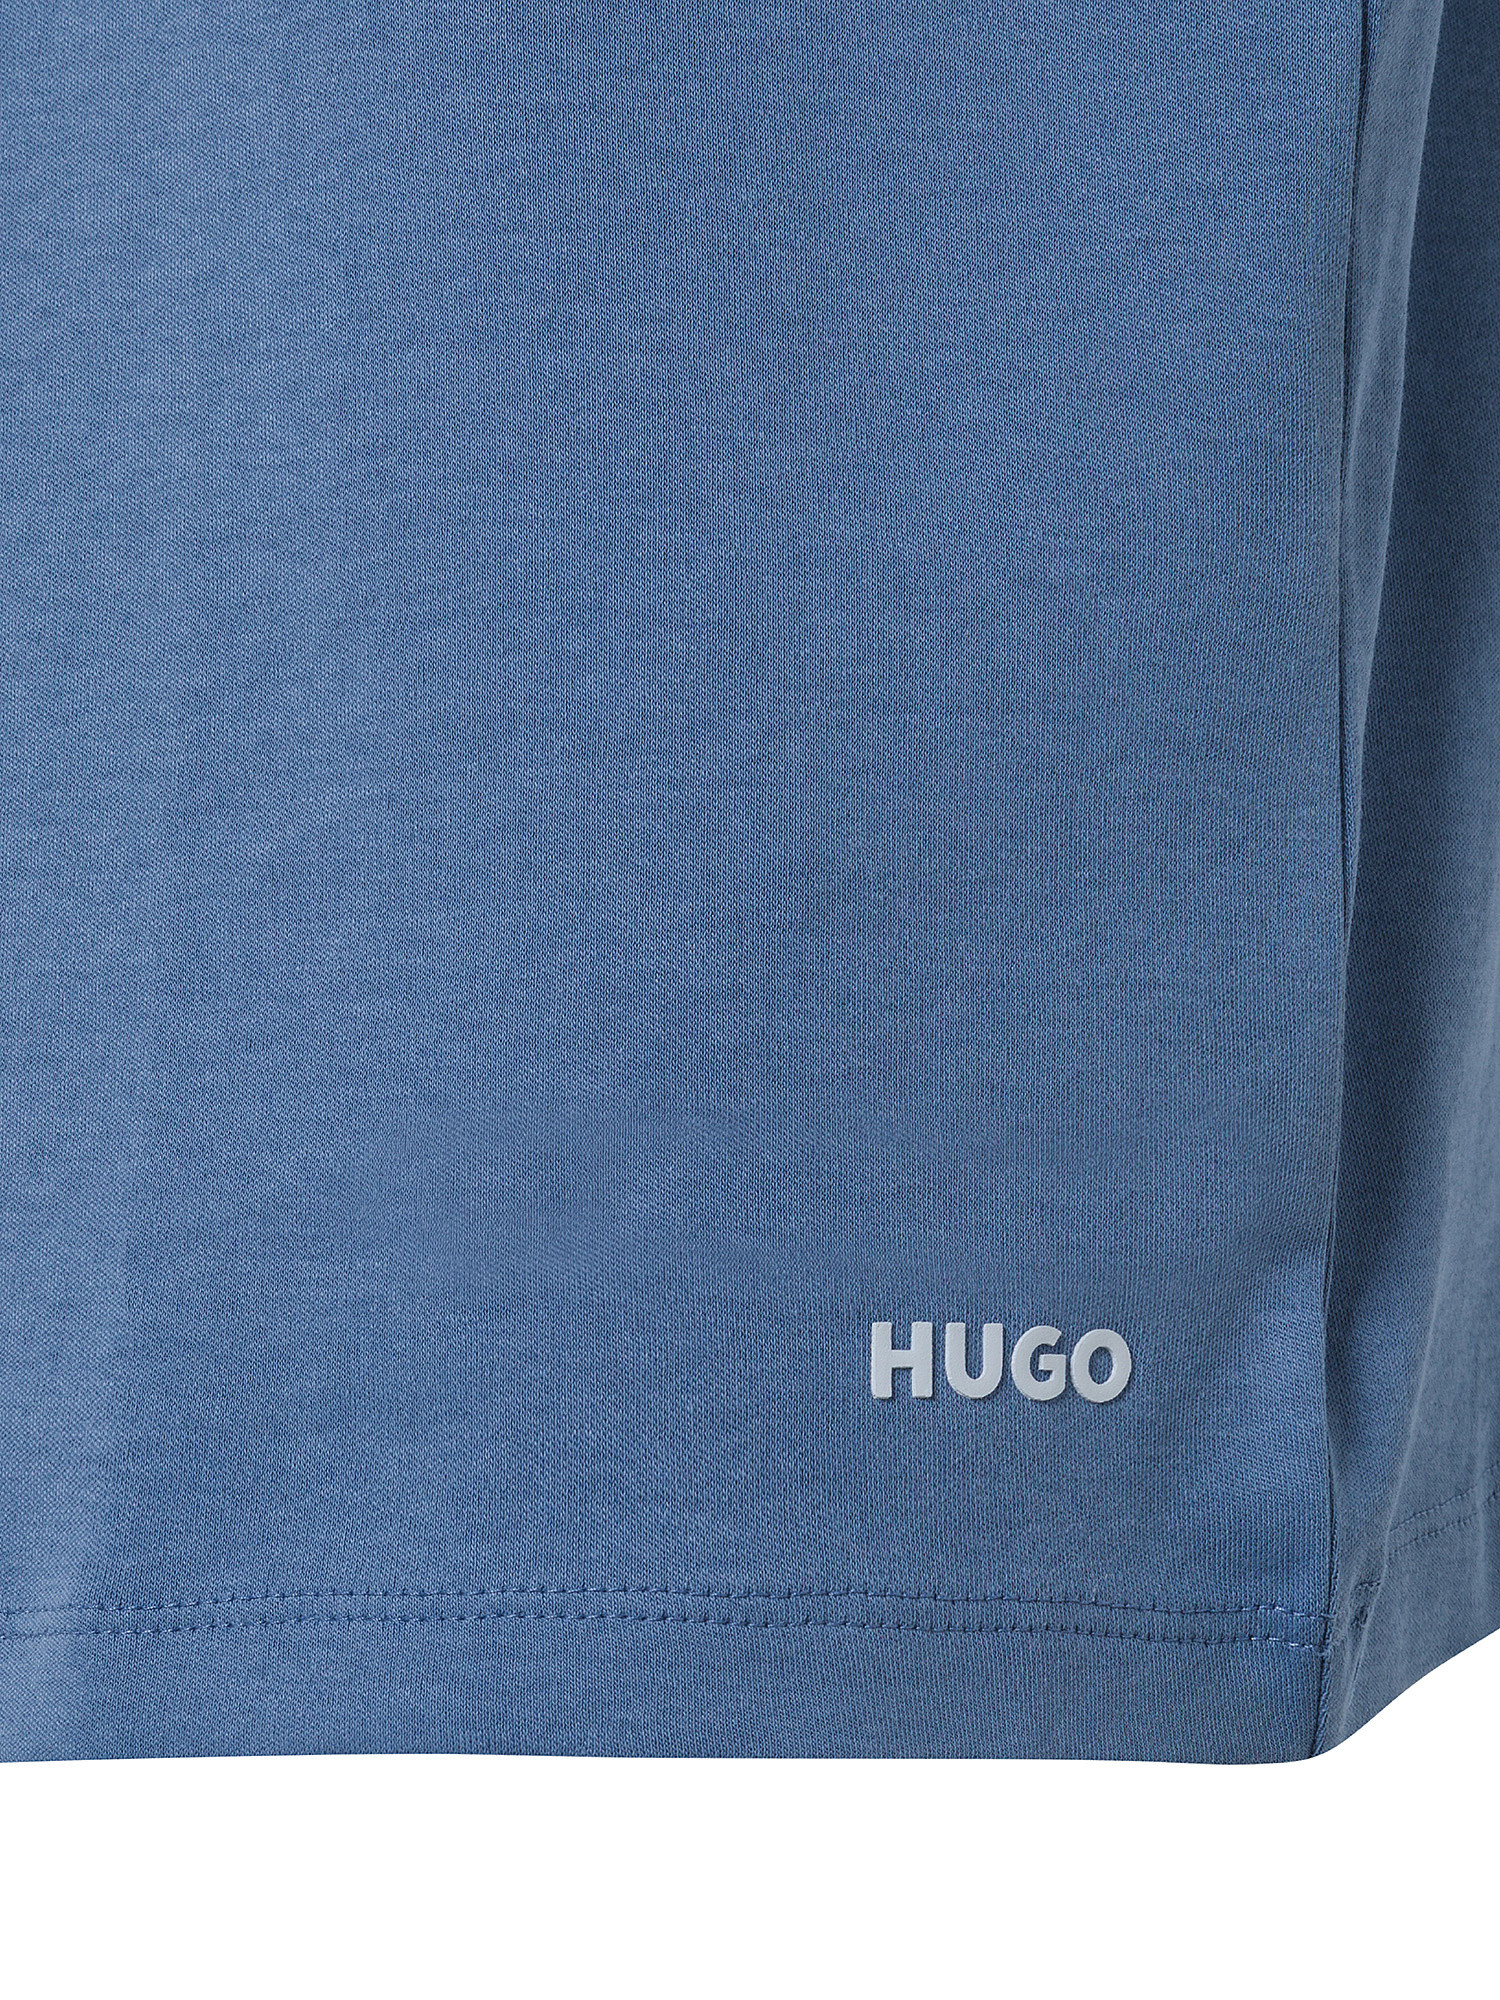 Hugo - T-shirt with logo print in cotton, Light Blue, large image number 2